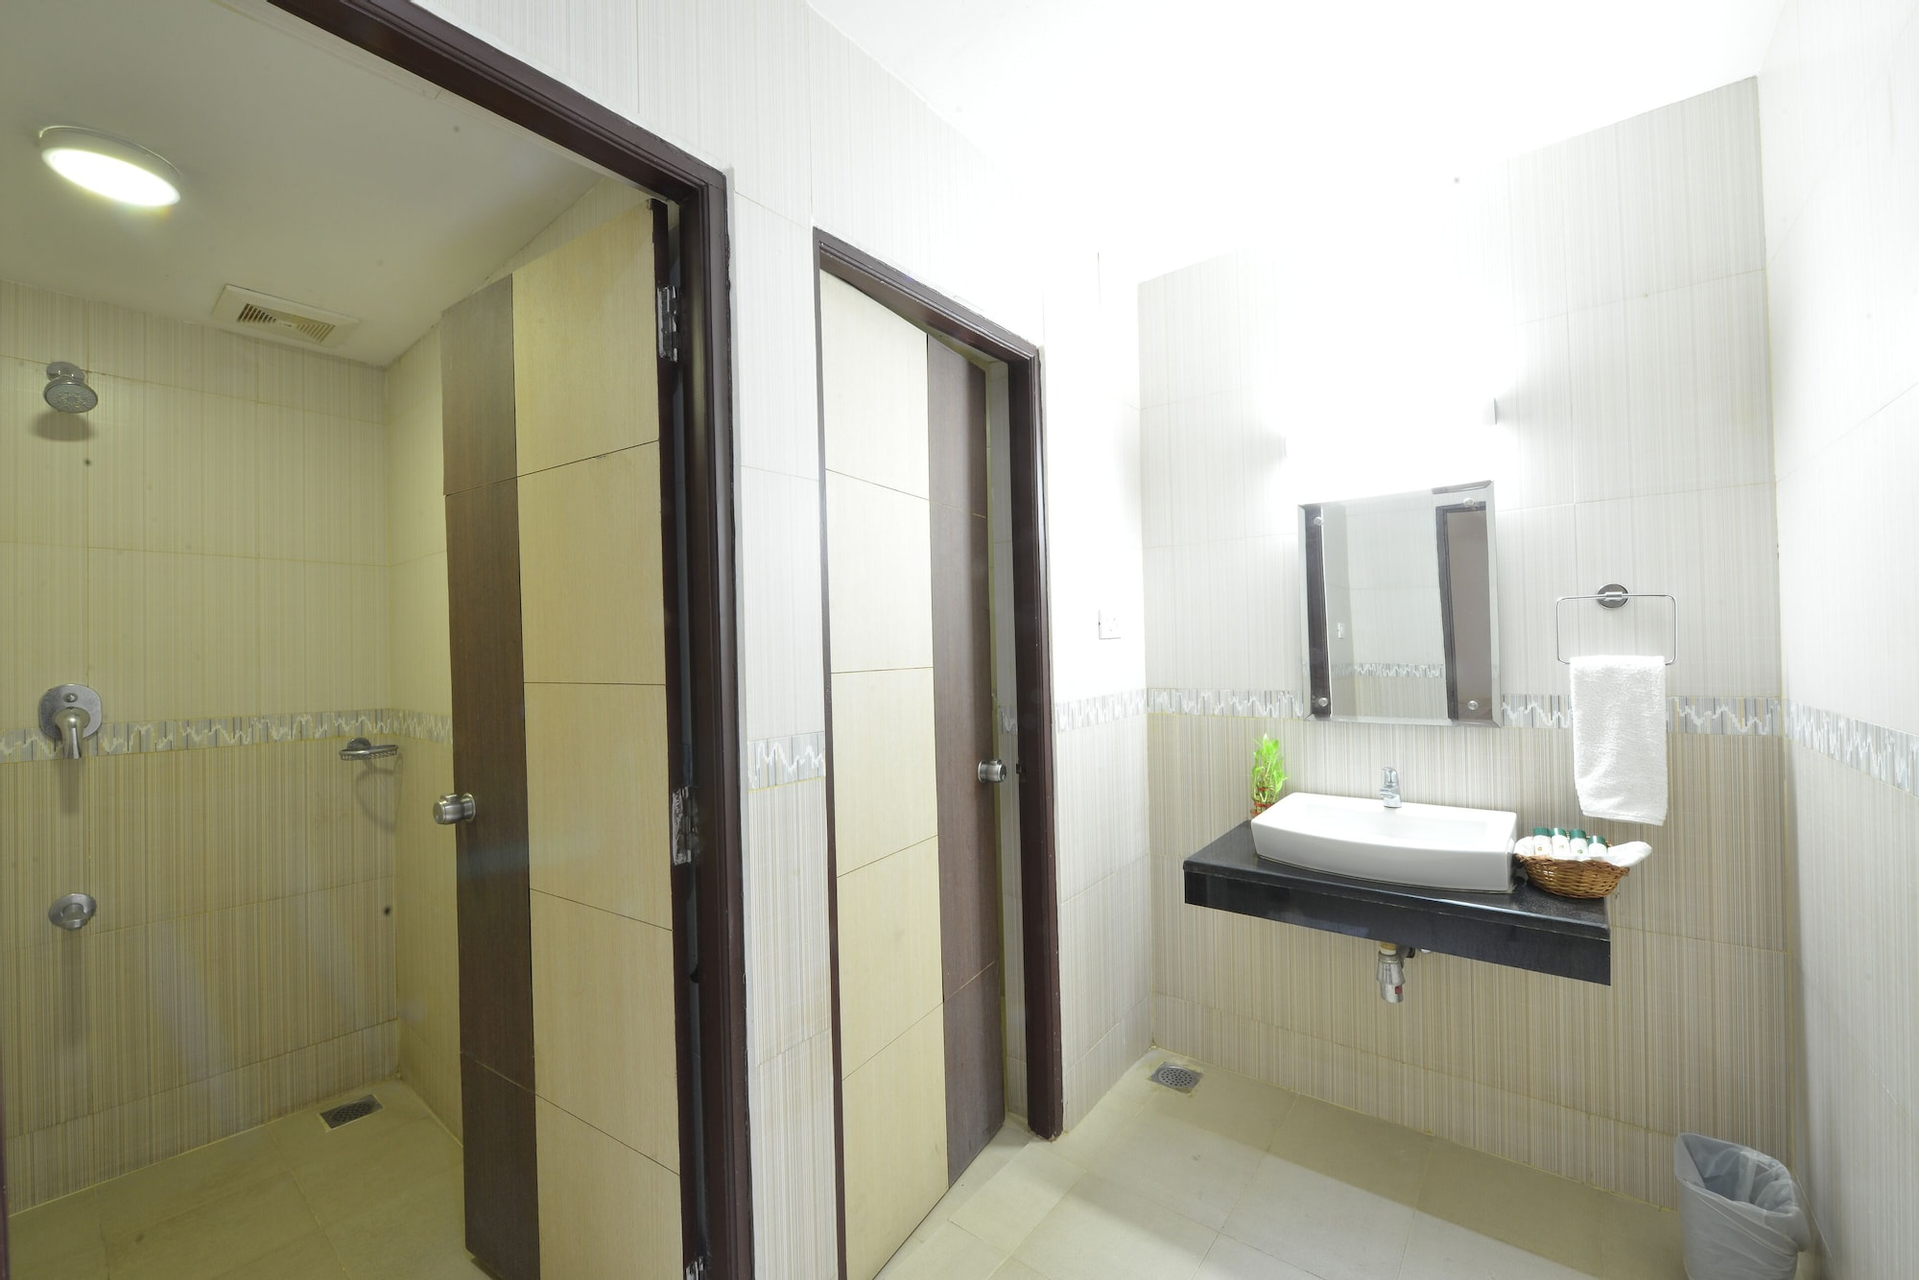 Bedroom 5, Srm Hotels, Thoothukkudi